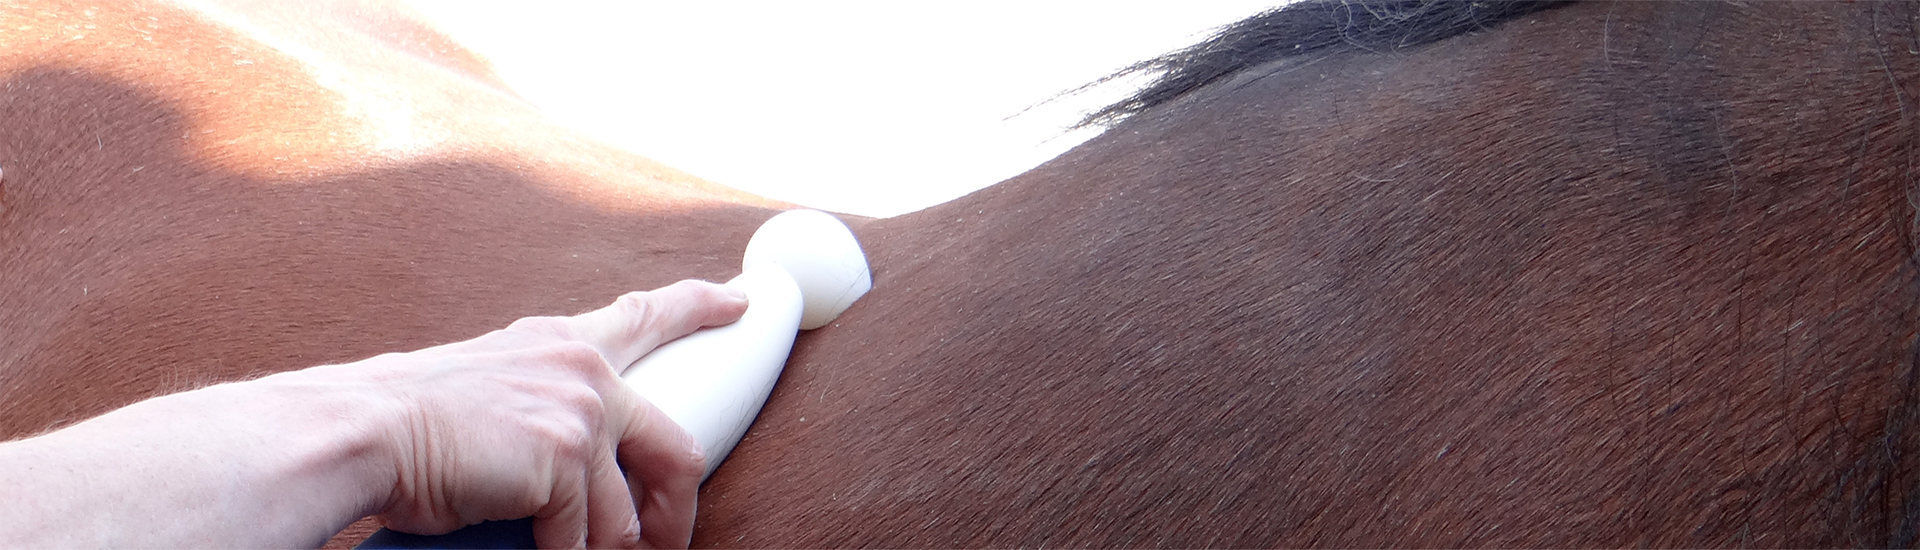 neuromusküläre stimulation am Pferd